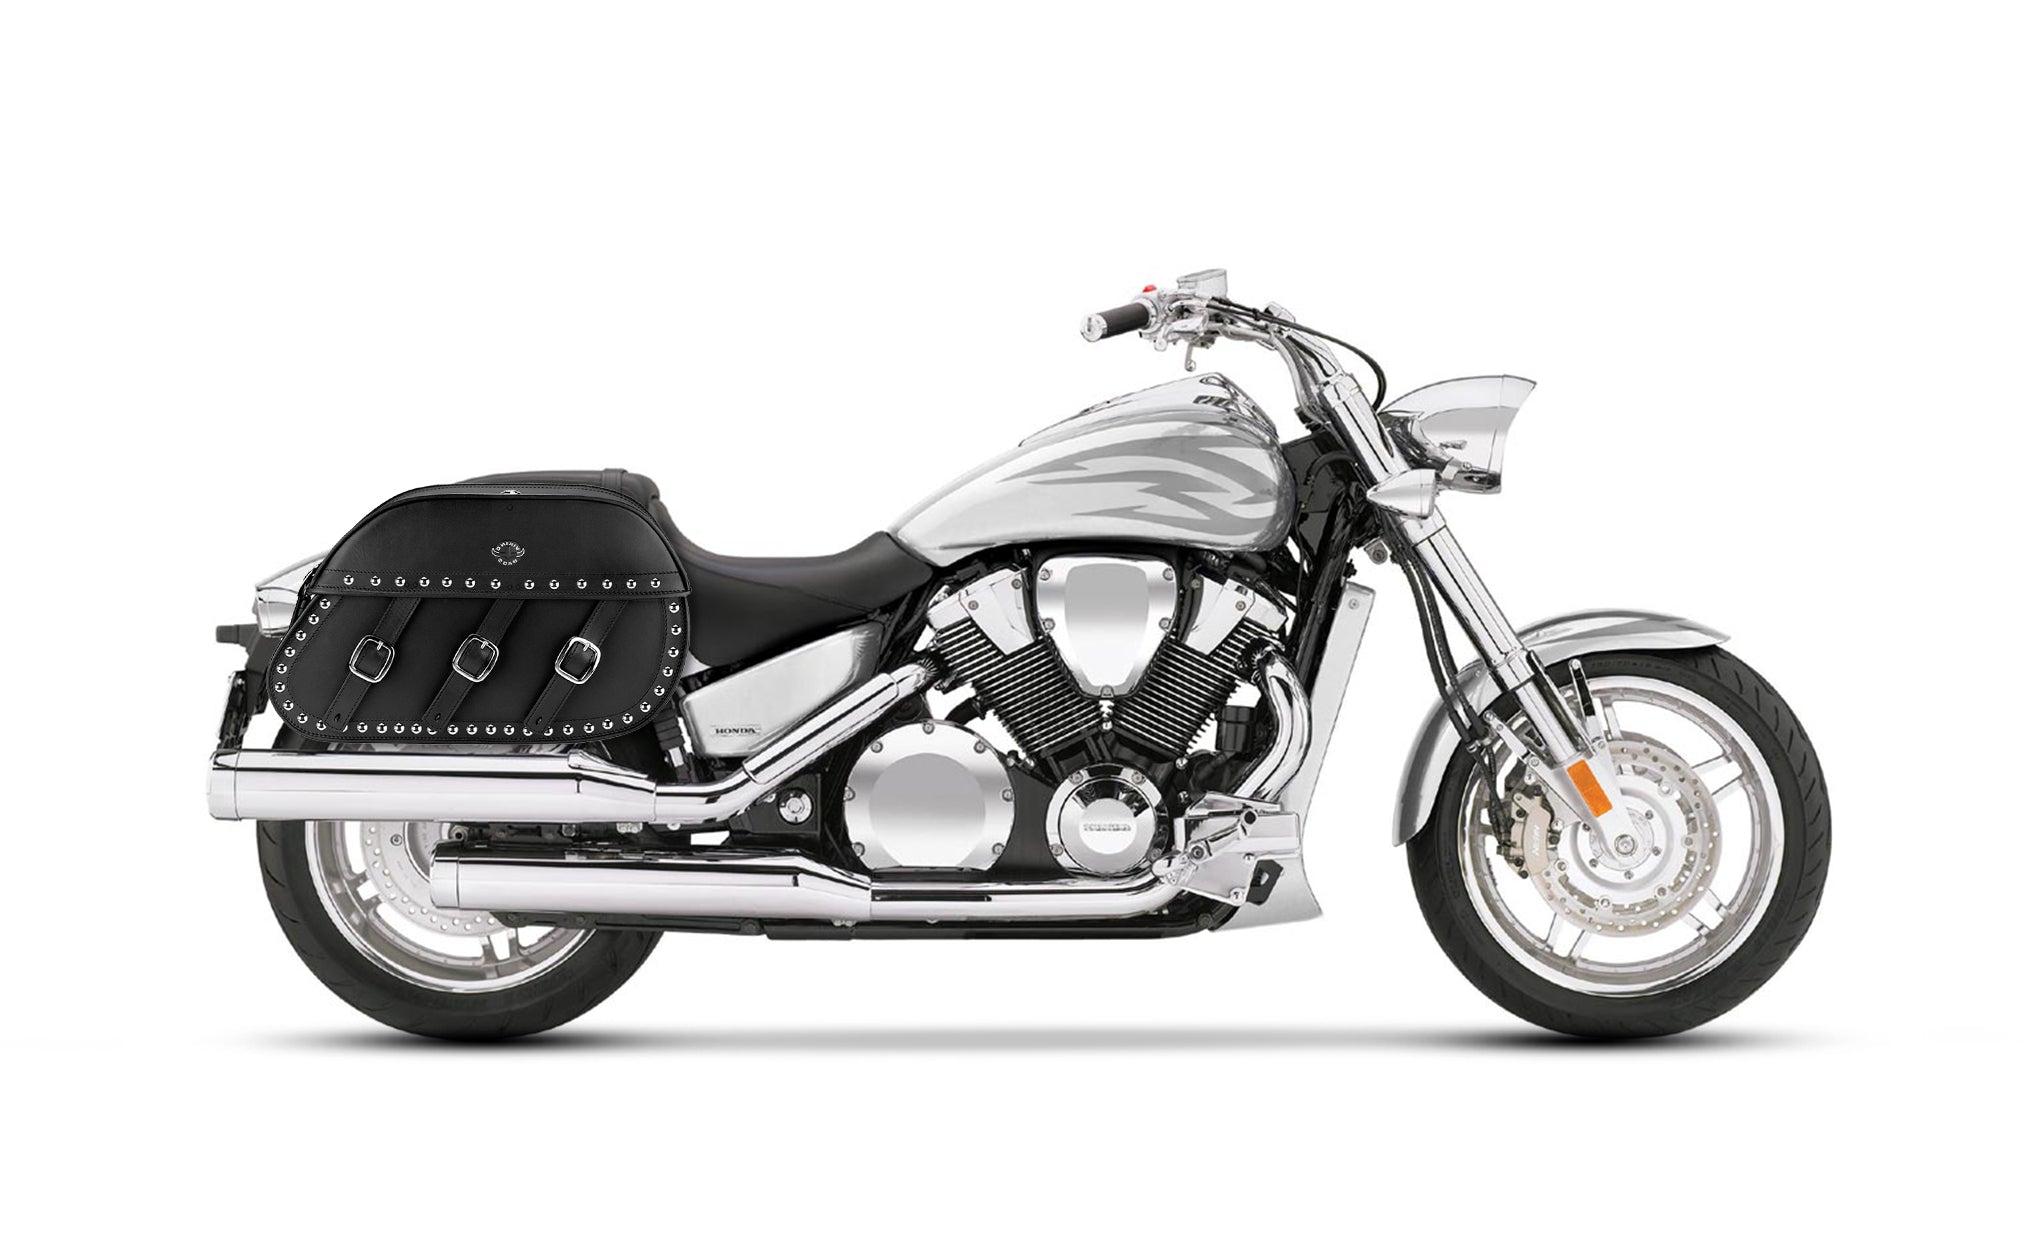 34L - Trianon Extra Large Honda VTX 1800 F Studded Leather Motorcycle Saddlebags on Bike Photo @expand